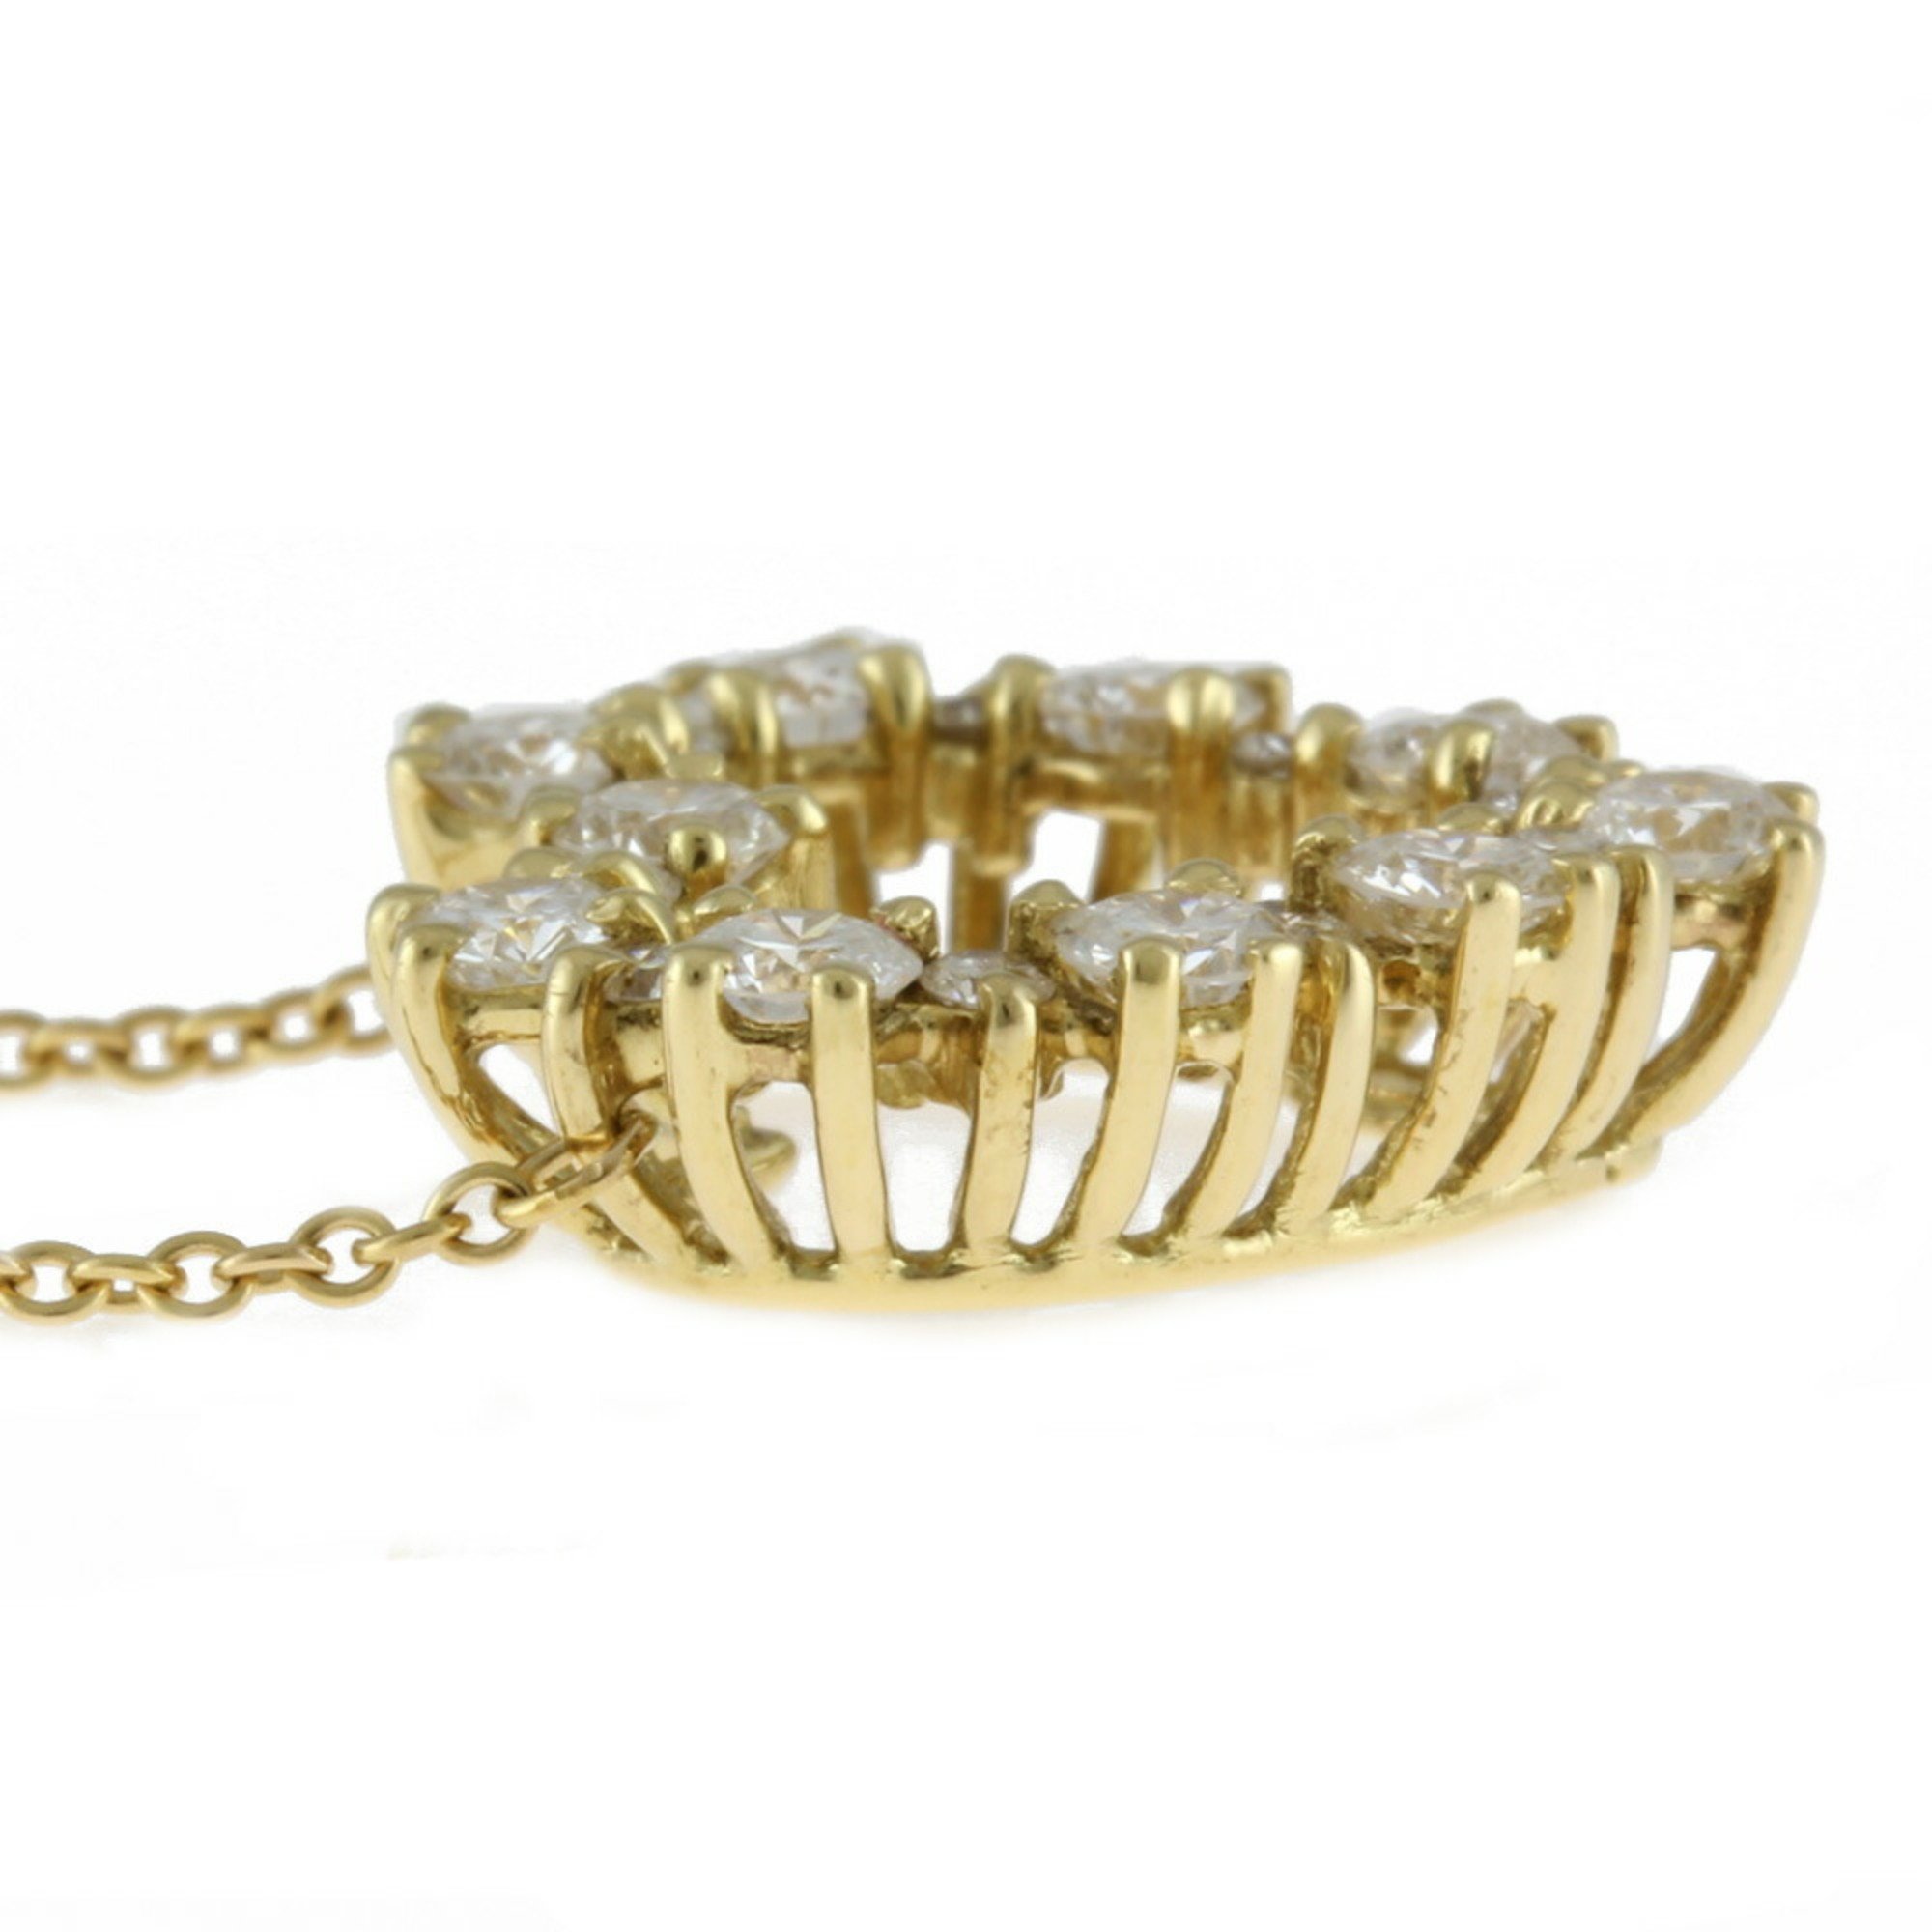 Valente Tiffany TIFFANY&Co. Necklace 18K K18 Gold Diamond Women's